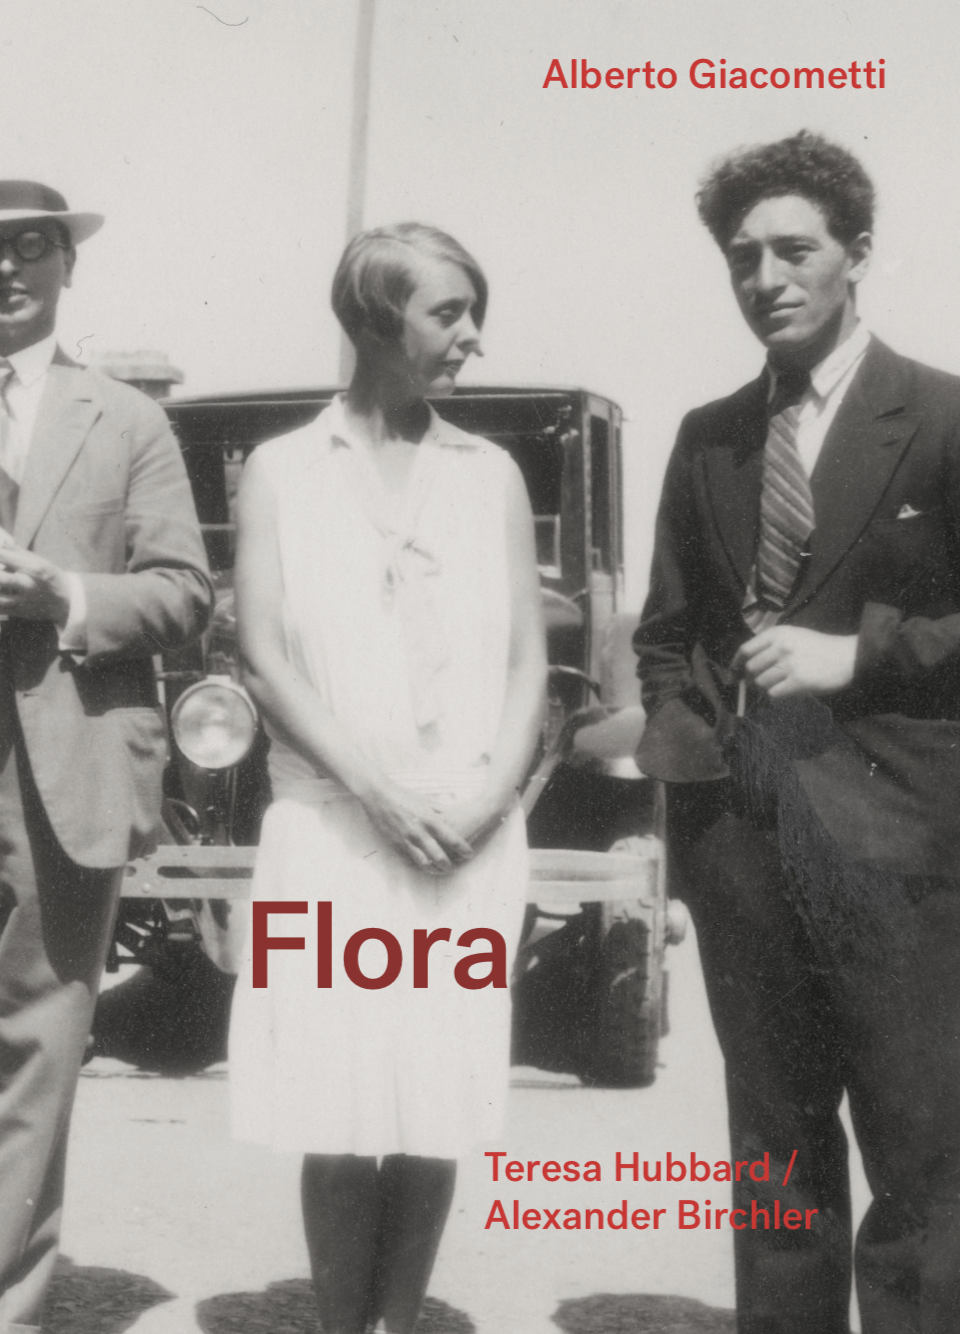 Fondation Giacometti -  Alberto Giacometti - Teresa Hubbard / Alexander Birchler - FLORA